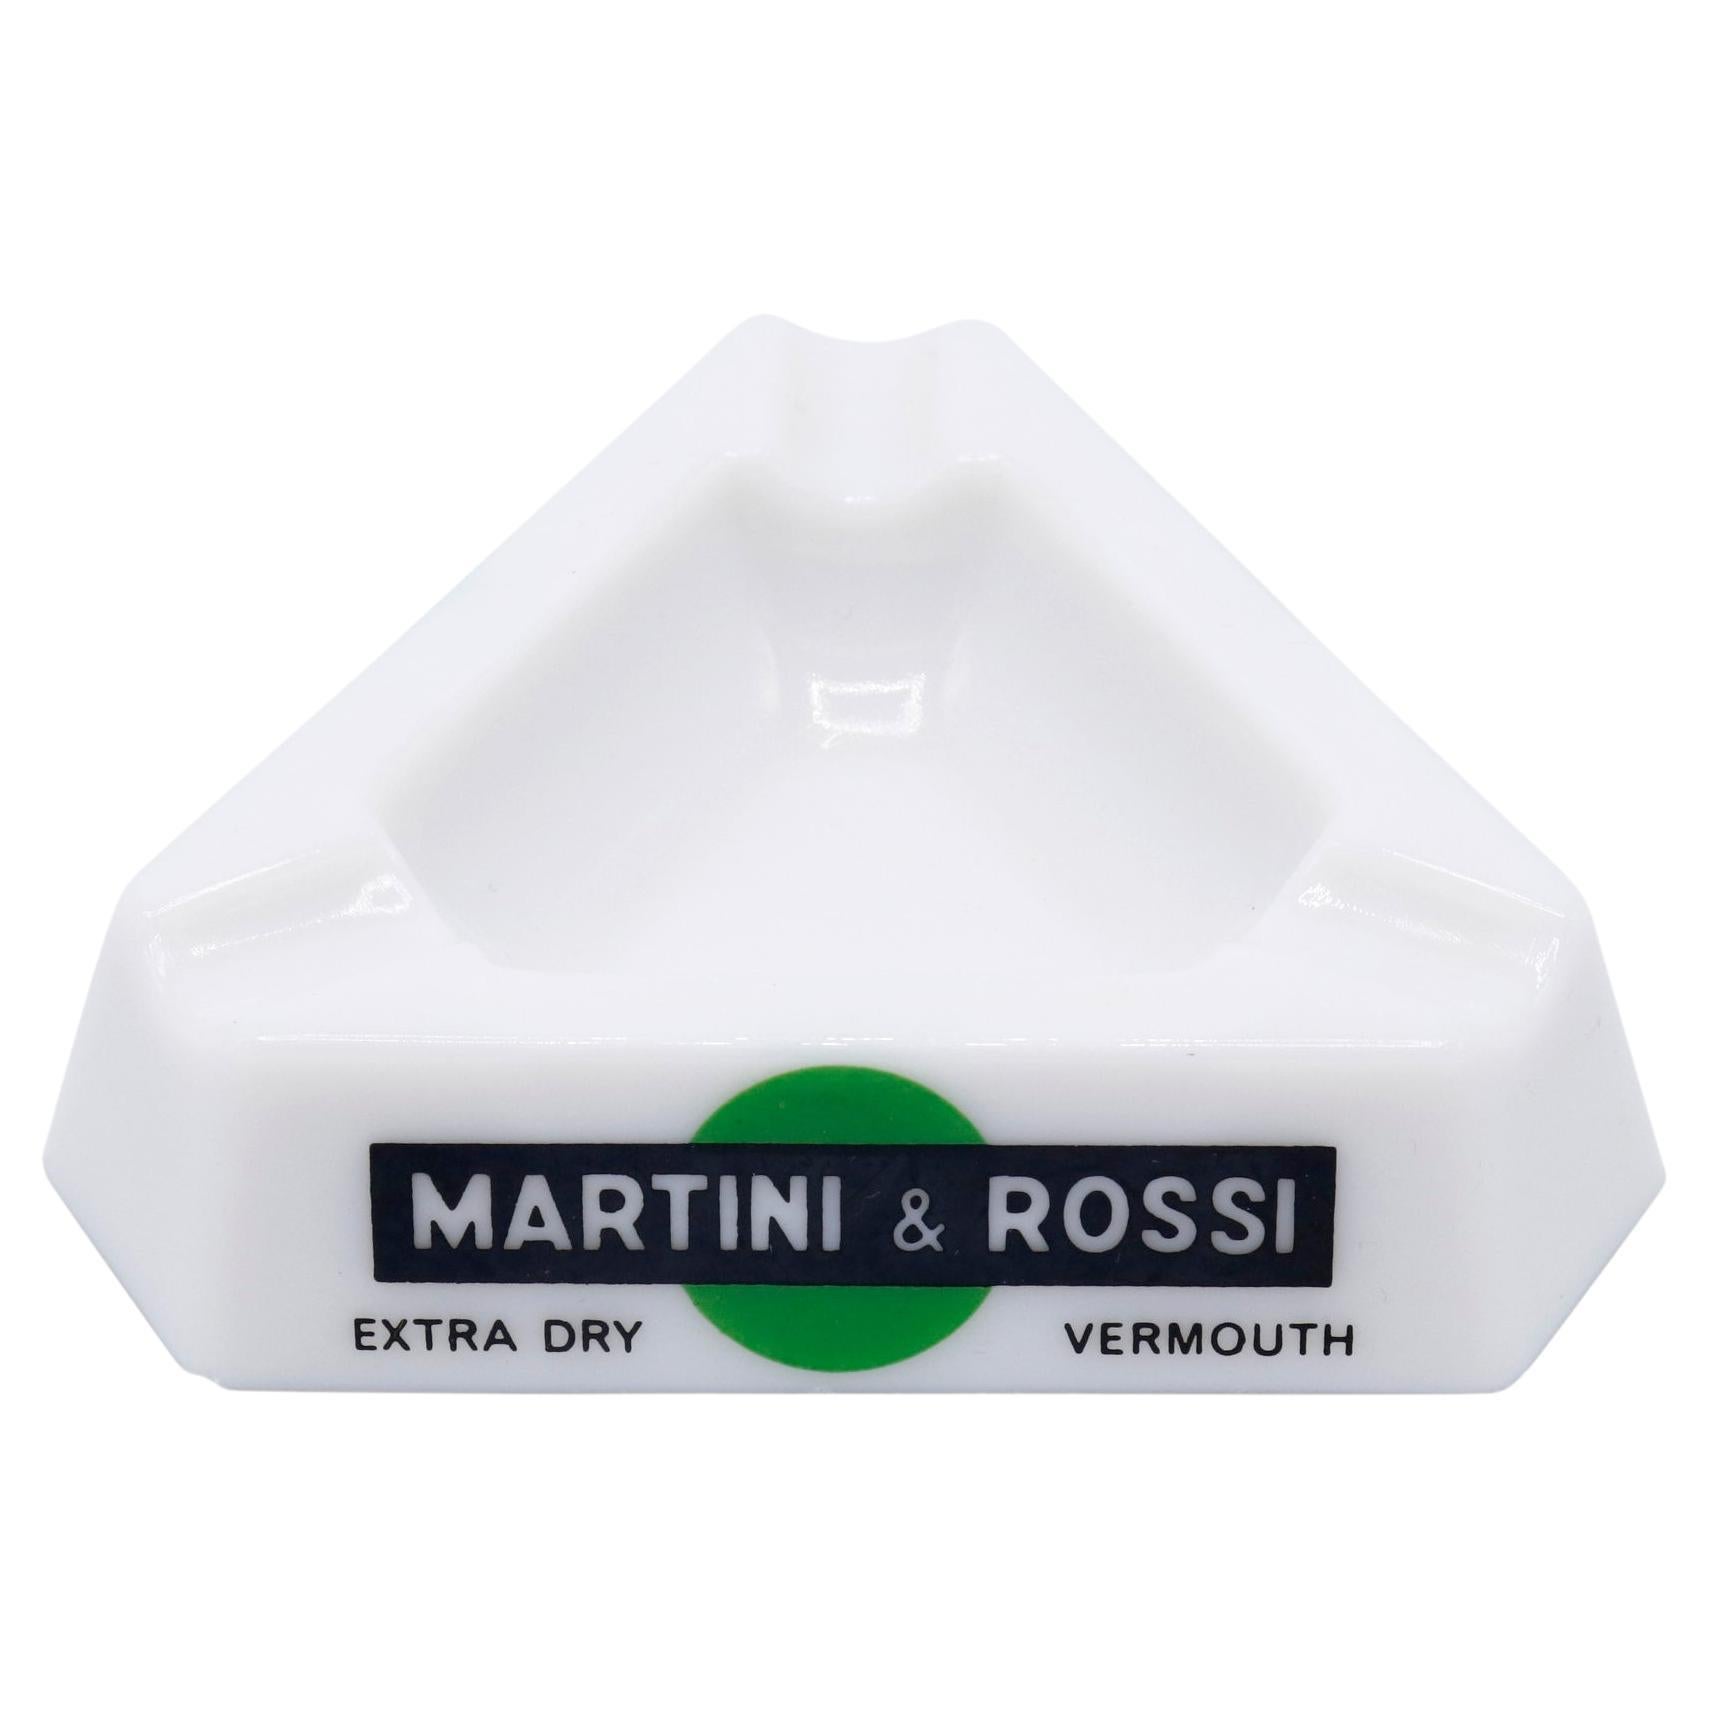 Martini & Rossi French Opalex Ashtray For Sale